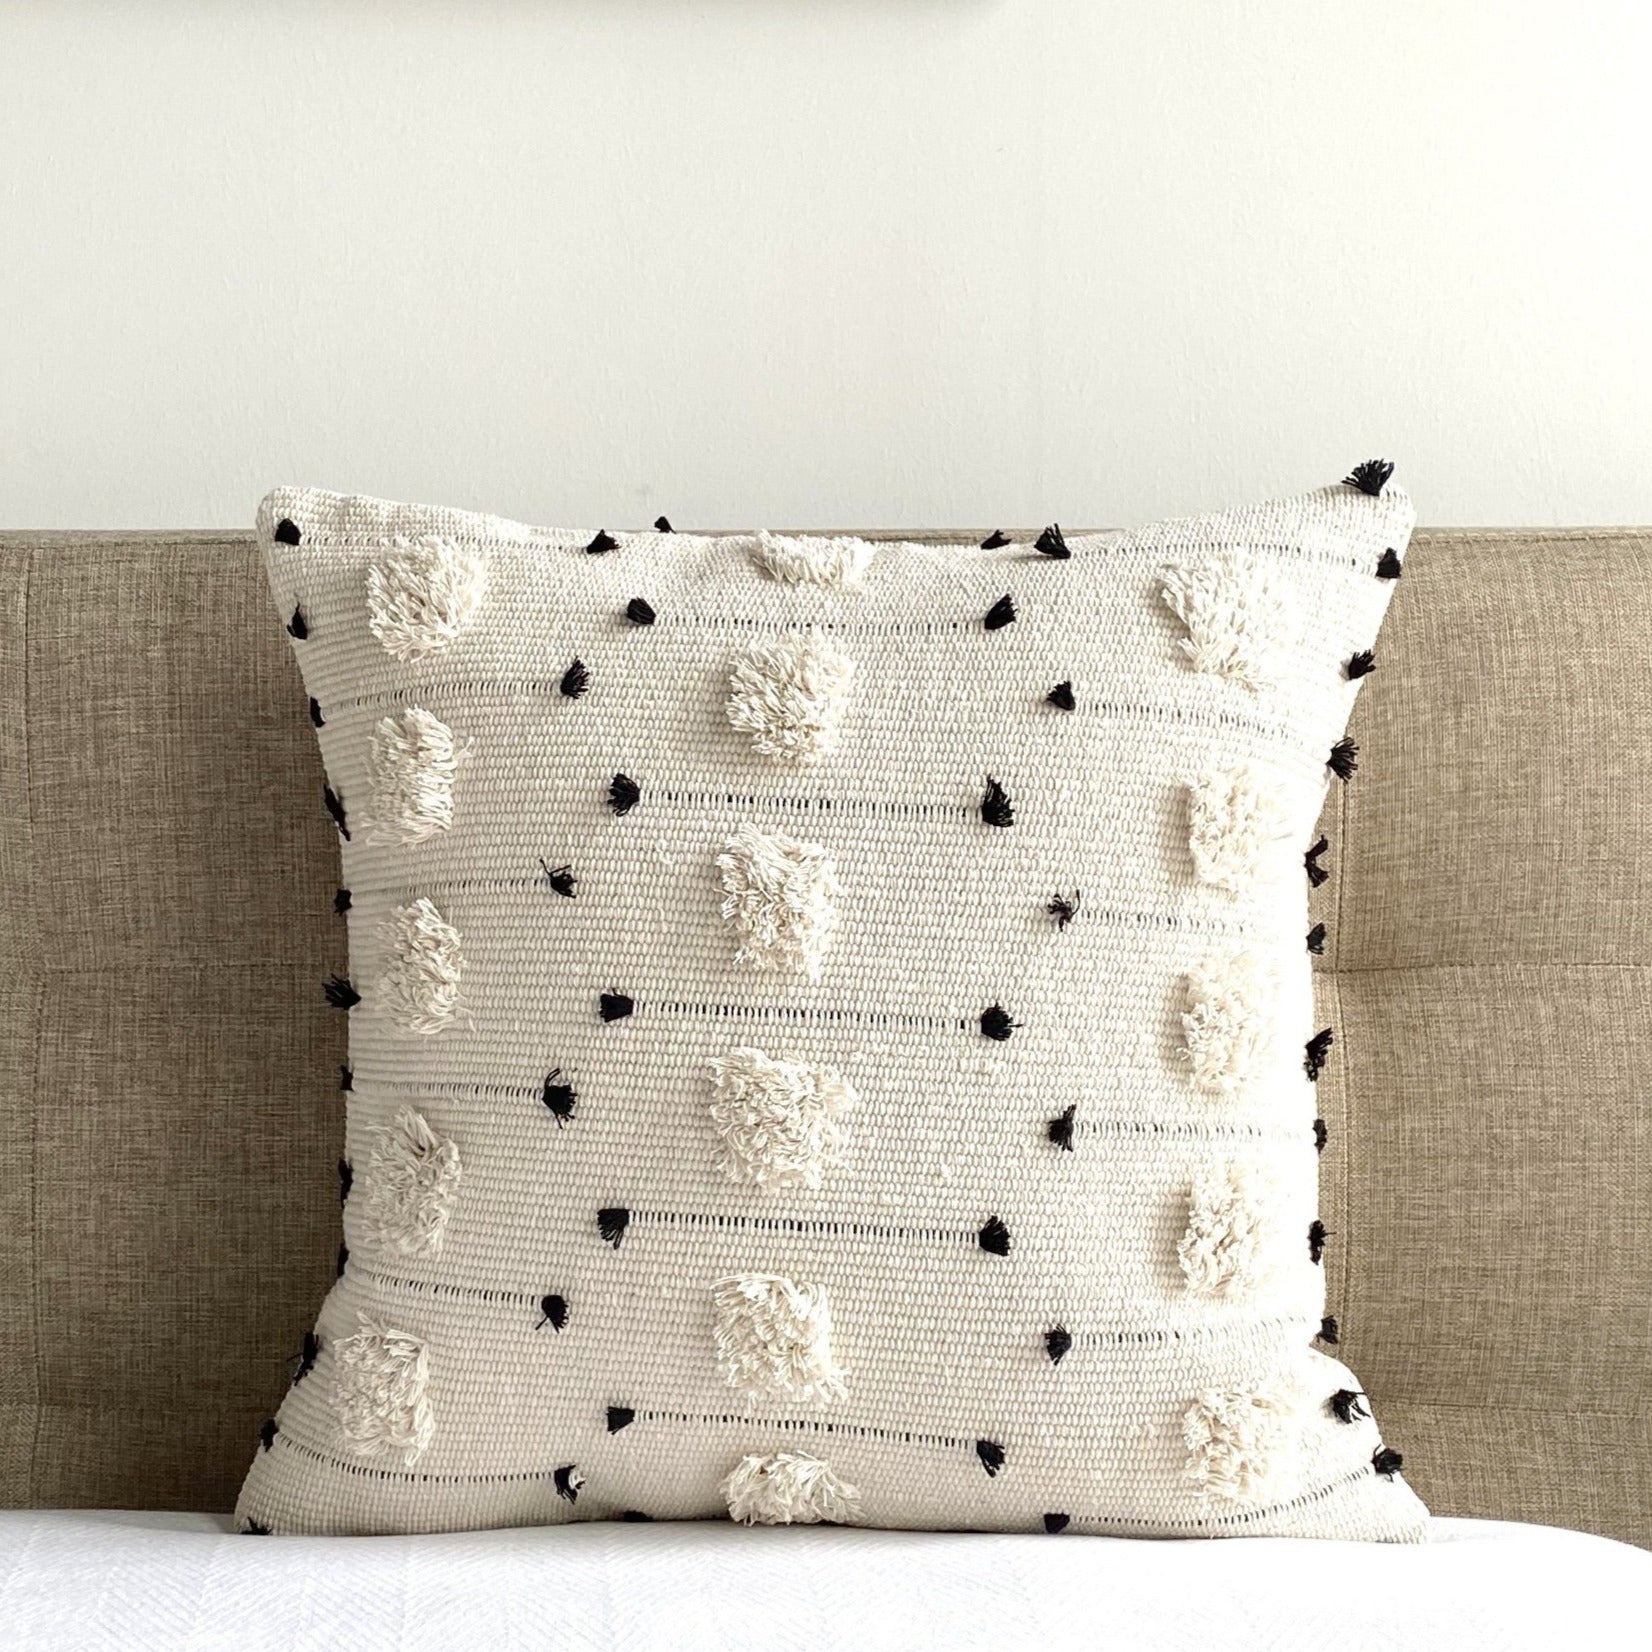 White Decorative Pillows